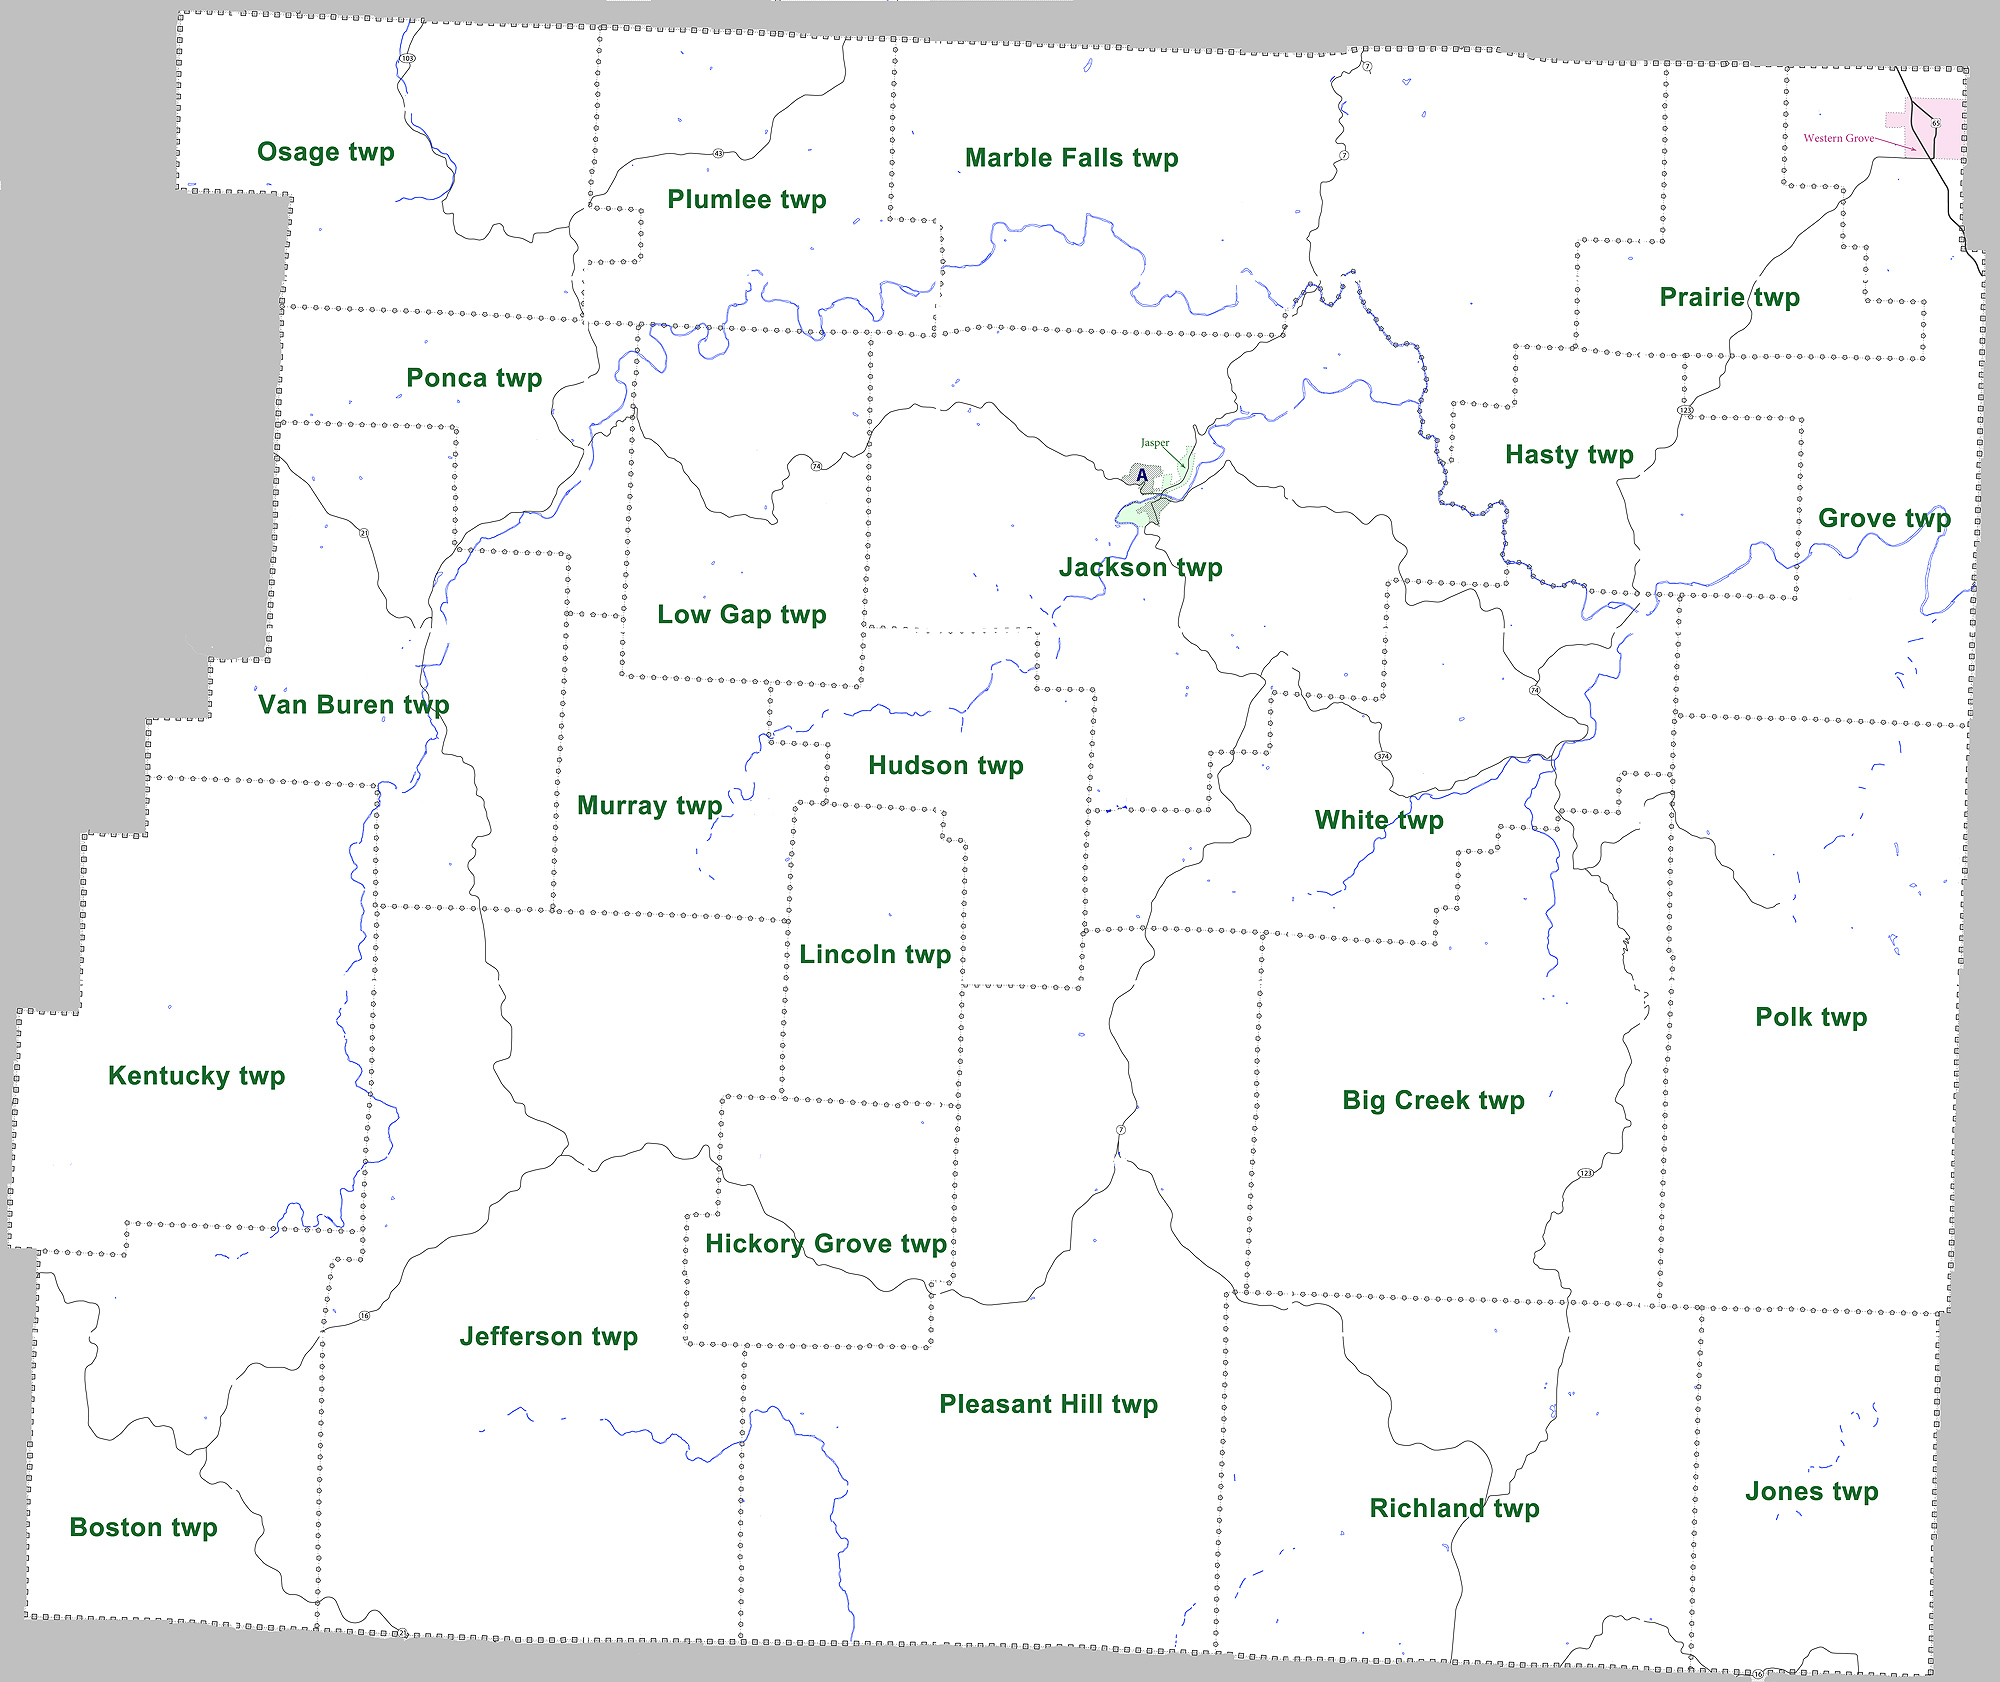 Newton_County_Arkansas_2010_Township_Map_large